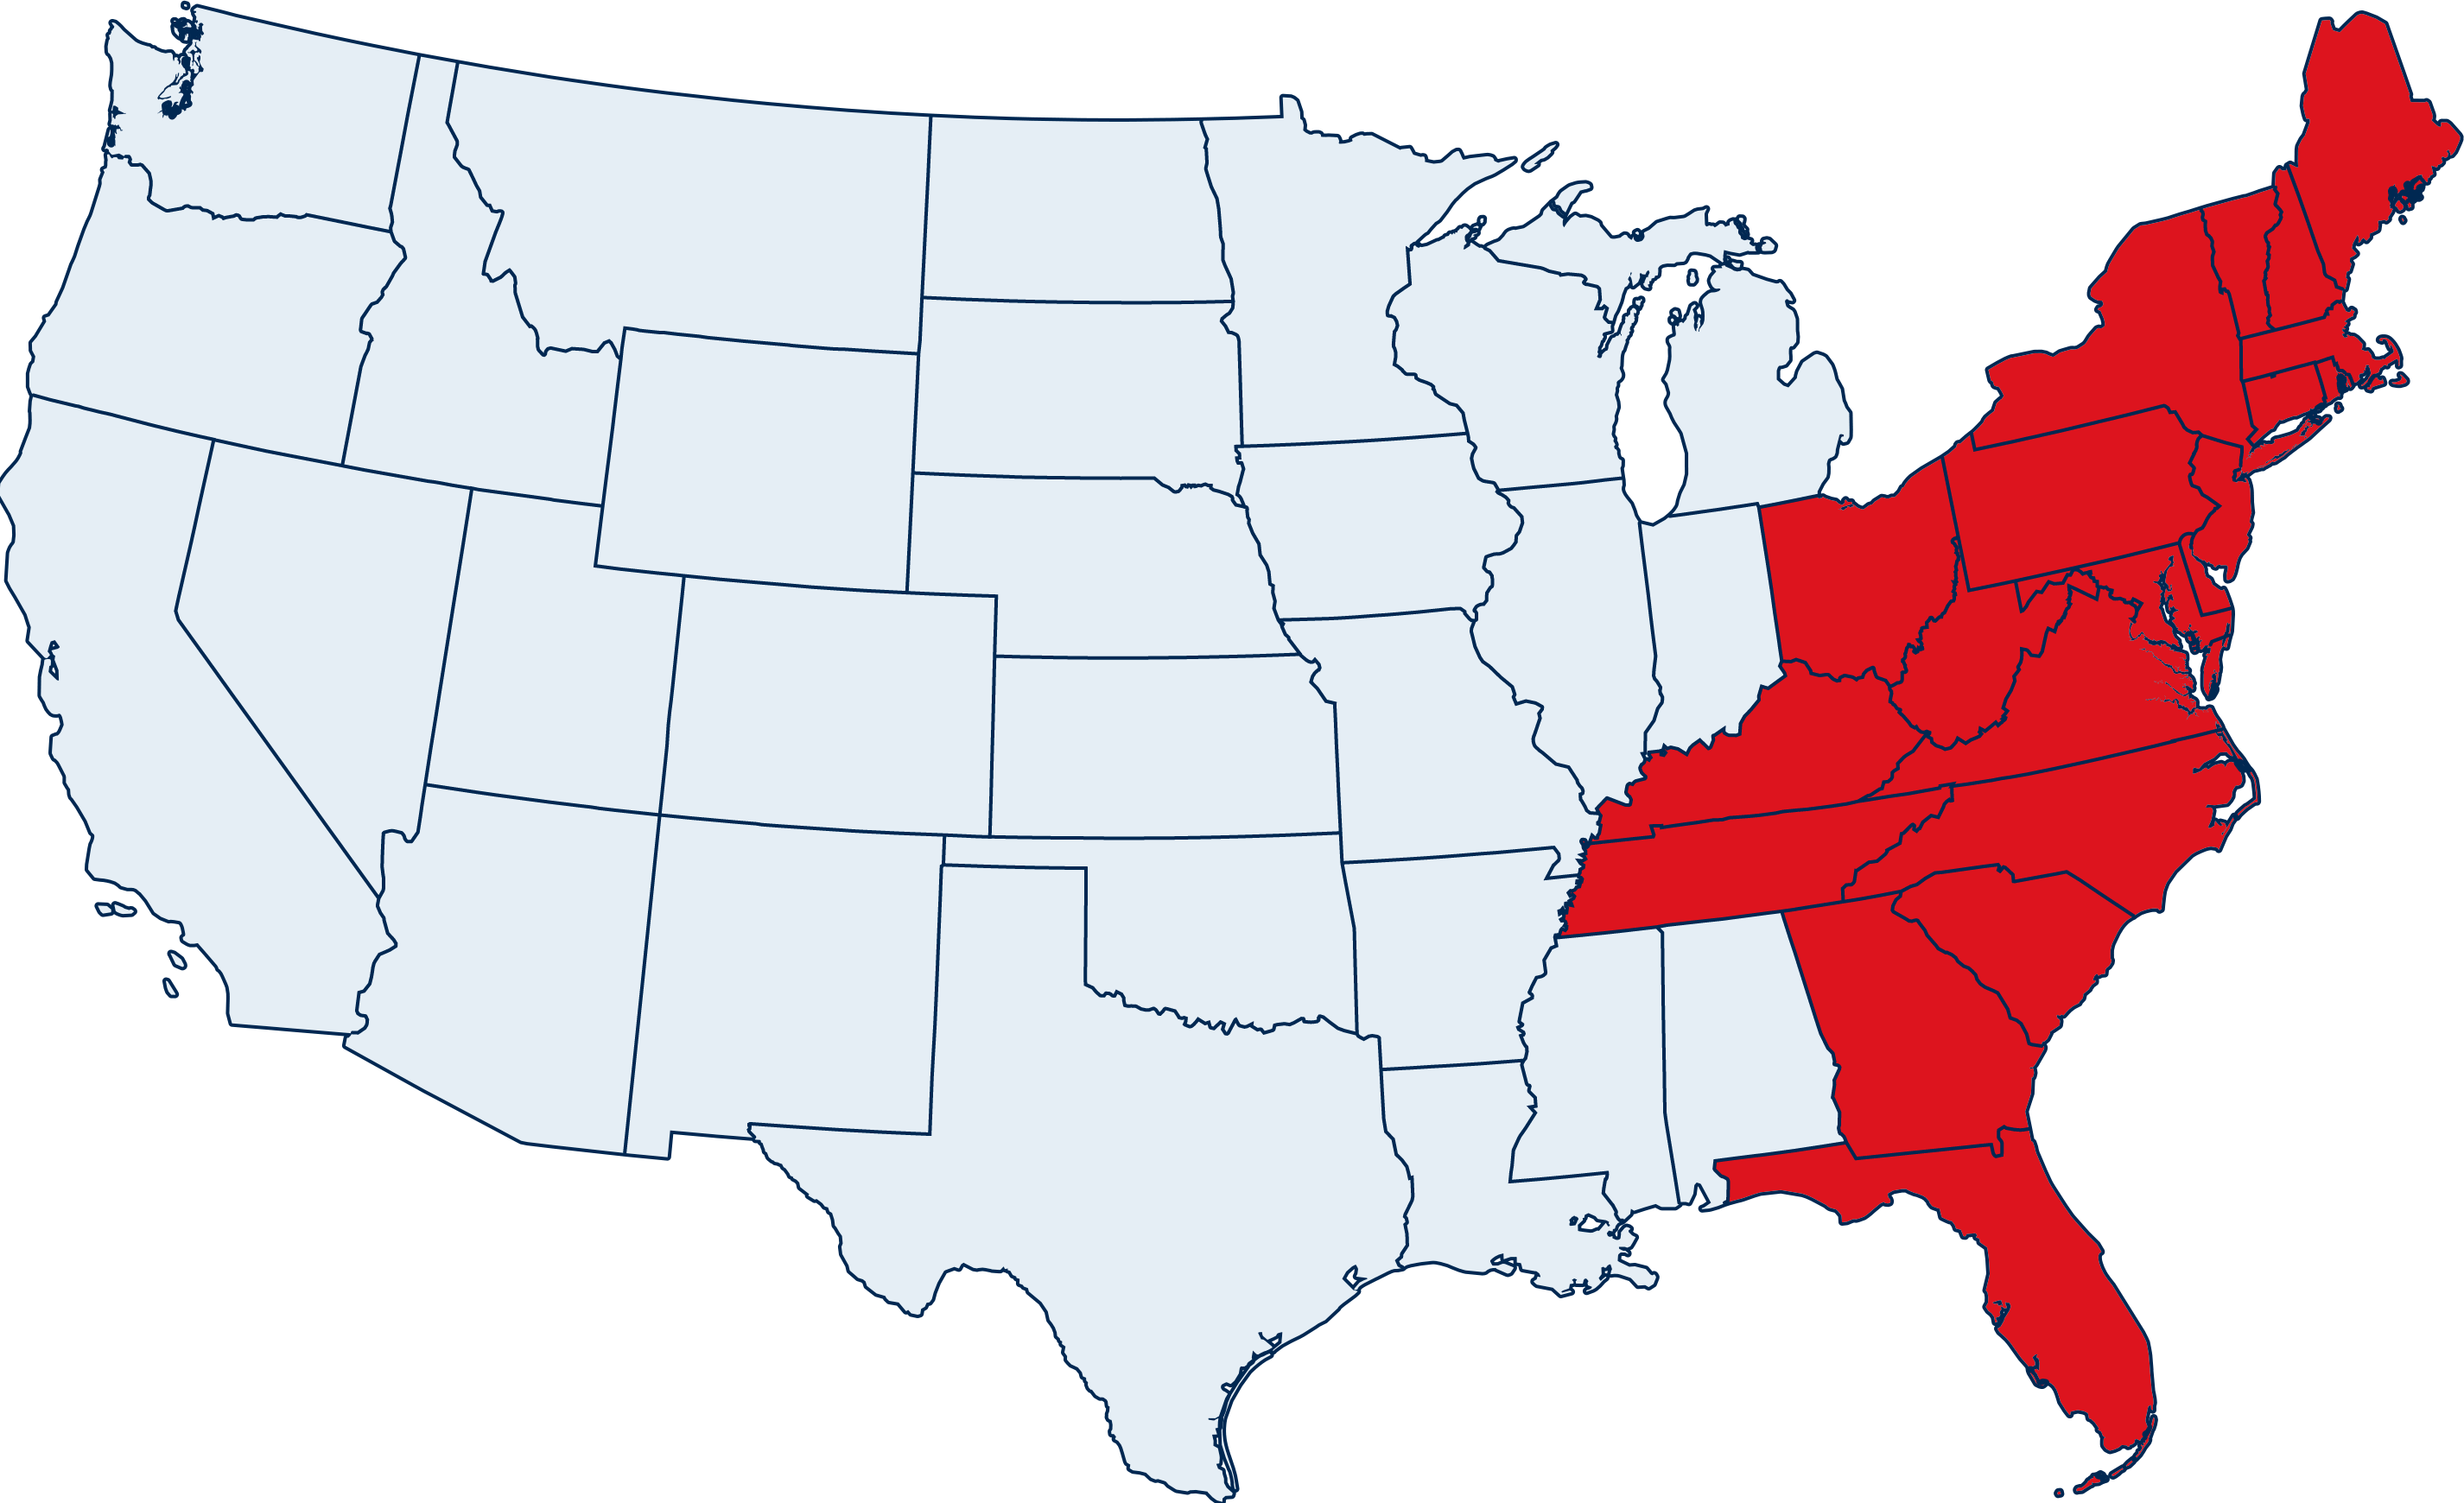 Service Map of USA - eastern region